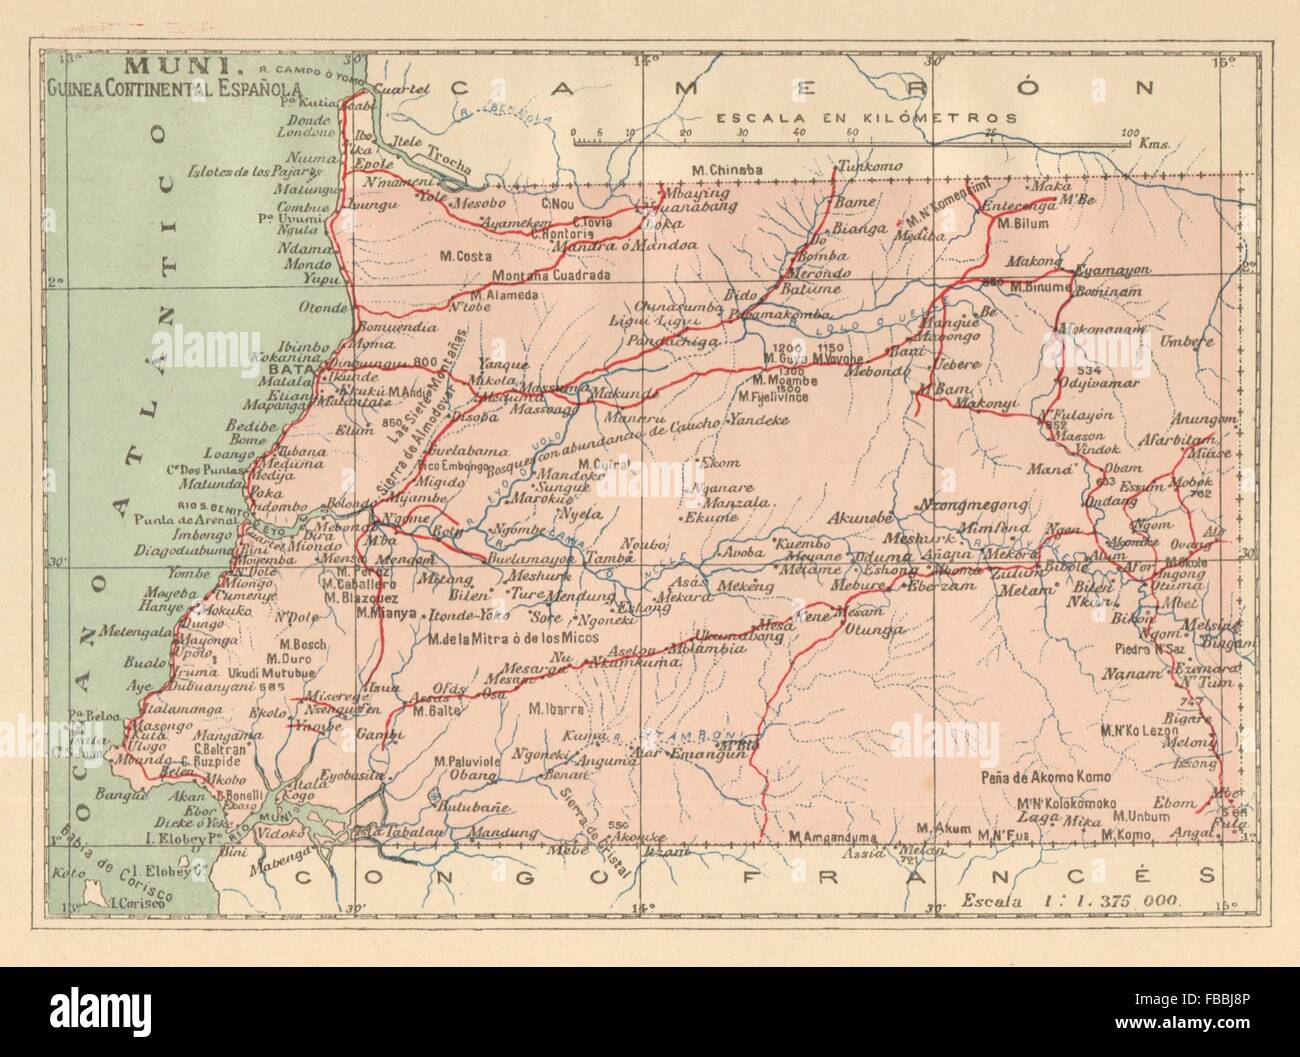 EQUATORIAL GUINEA ECUATORIAL. Muni Guinea continental Espanola. MARTIN c1911 map Stock Photo